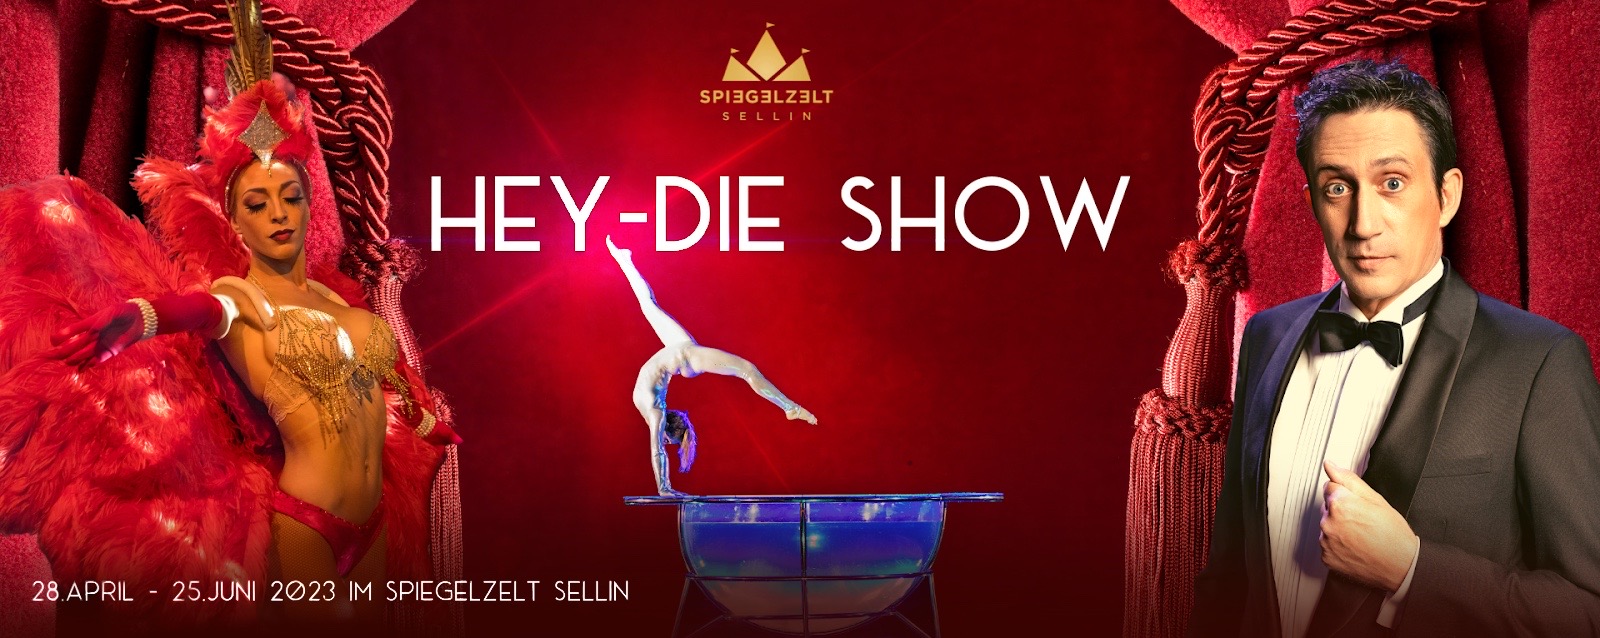 hey-die-show-2023